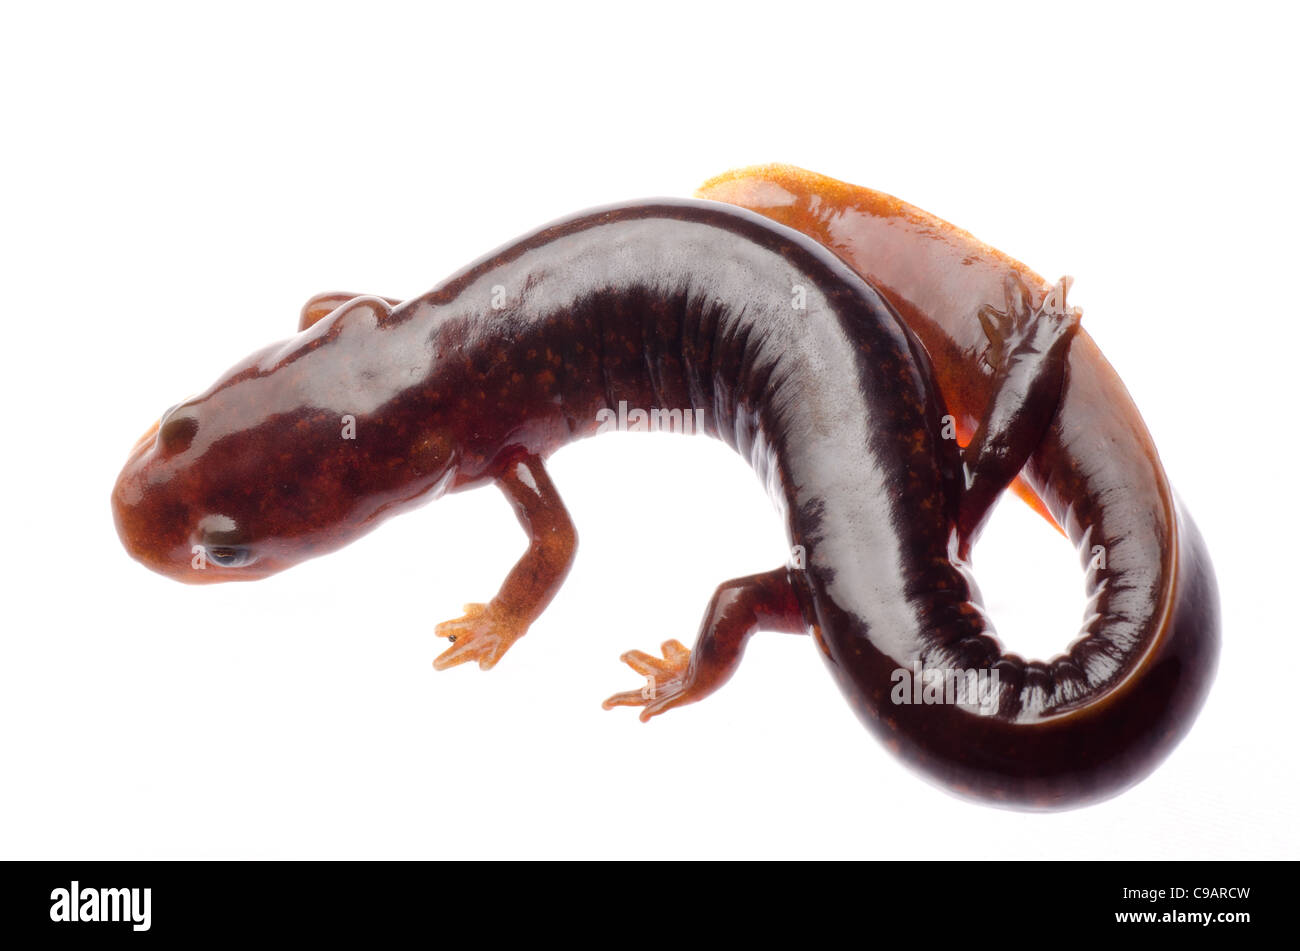 Cinese salamandra tsitou newt isolato su bianco Foto Stock